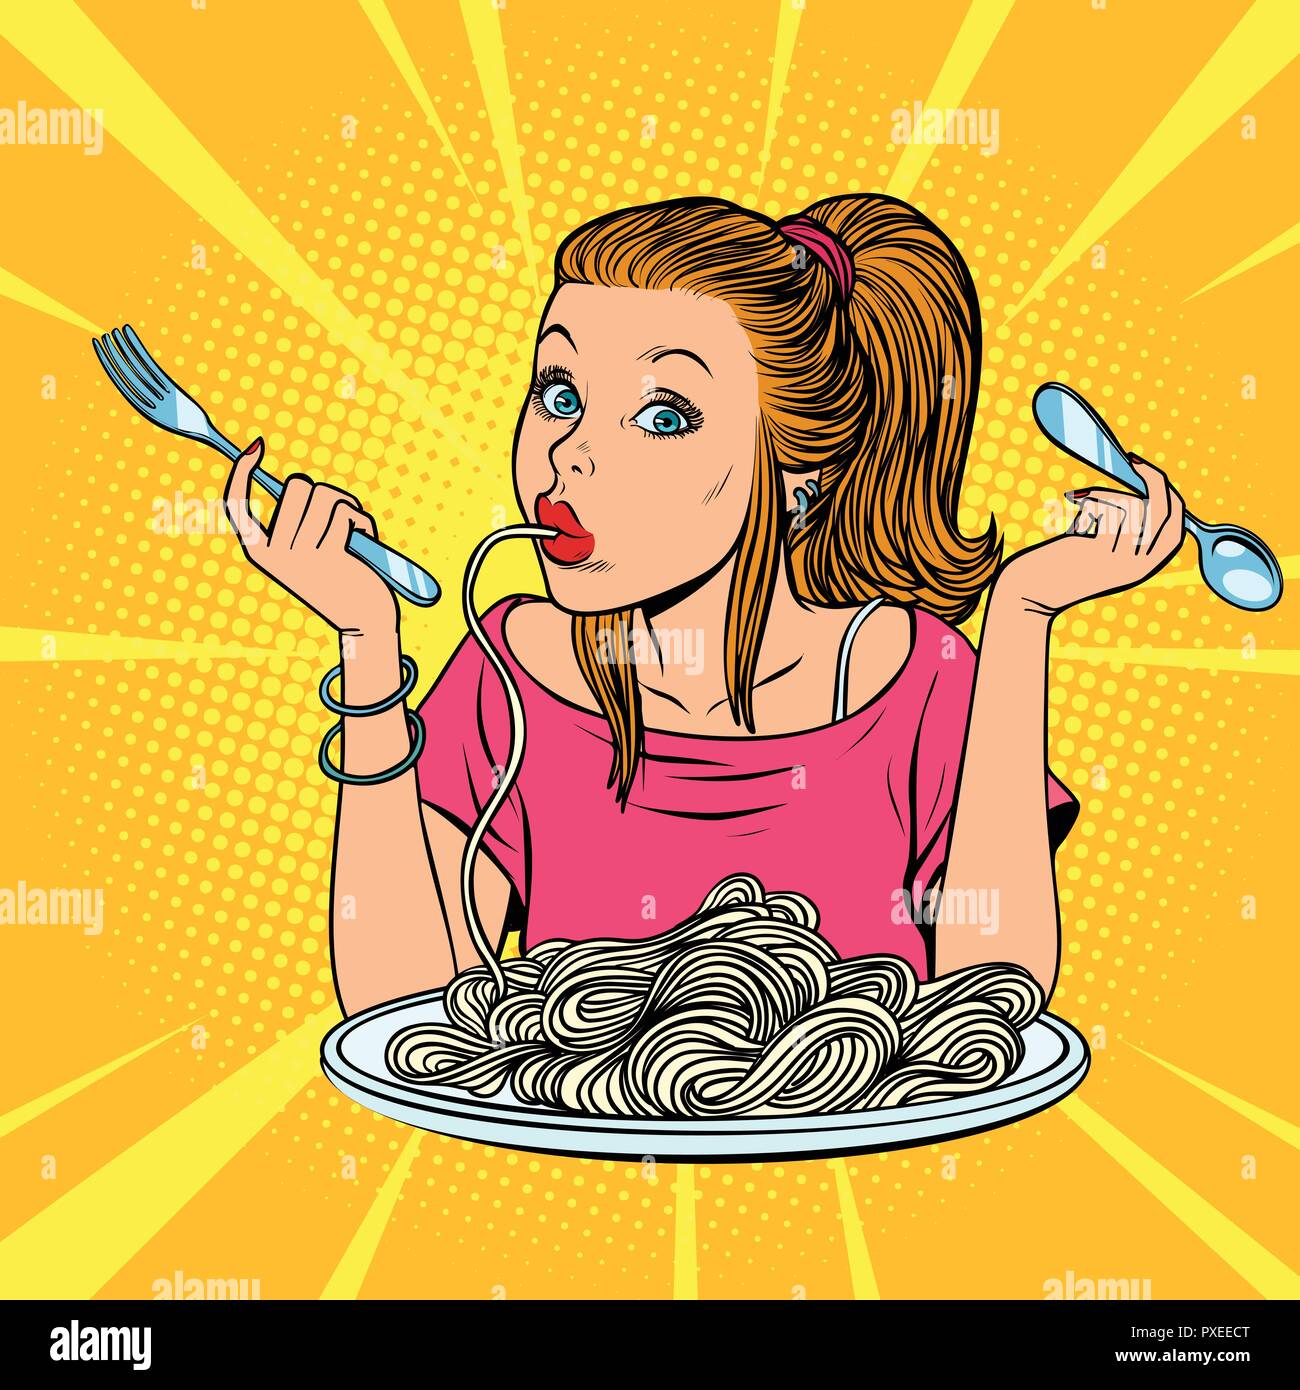 woman eating spaghetti Stock Vector